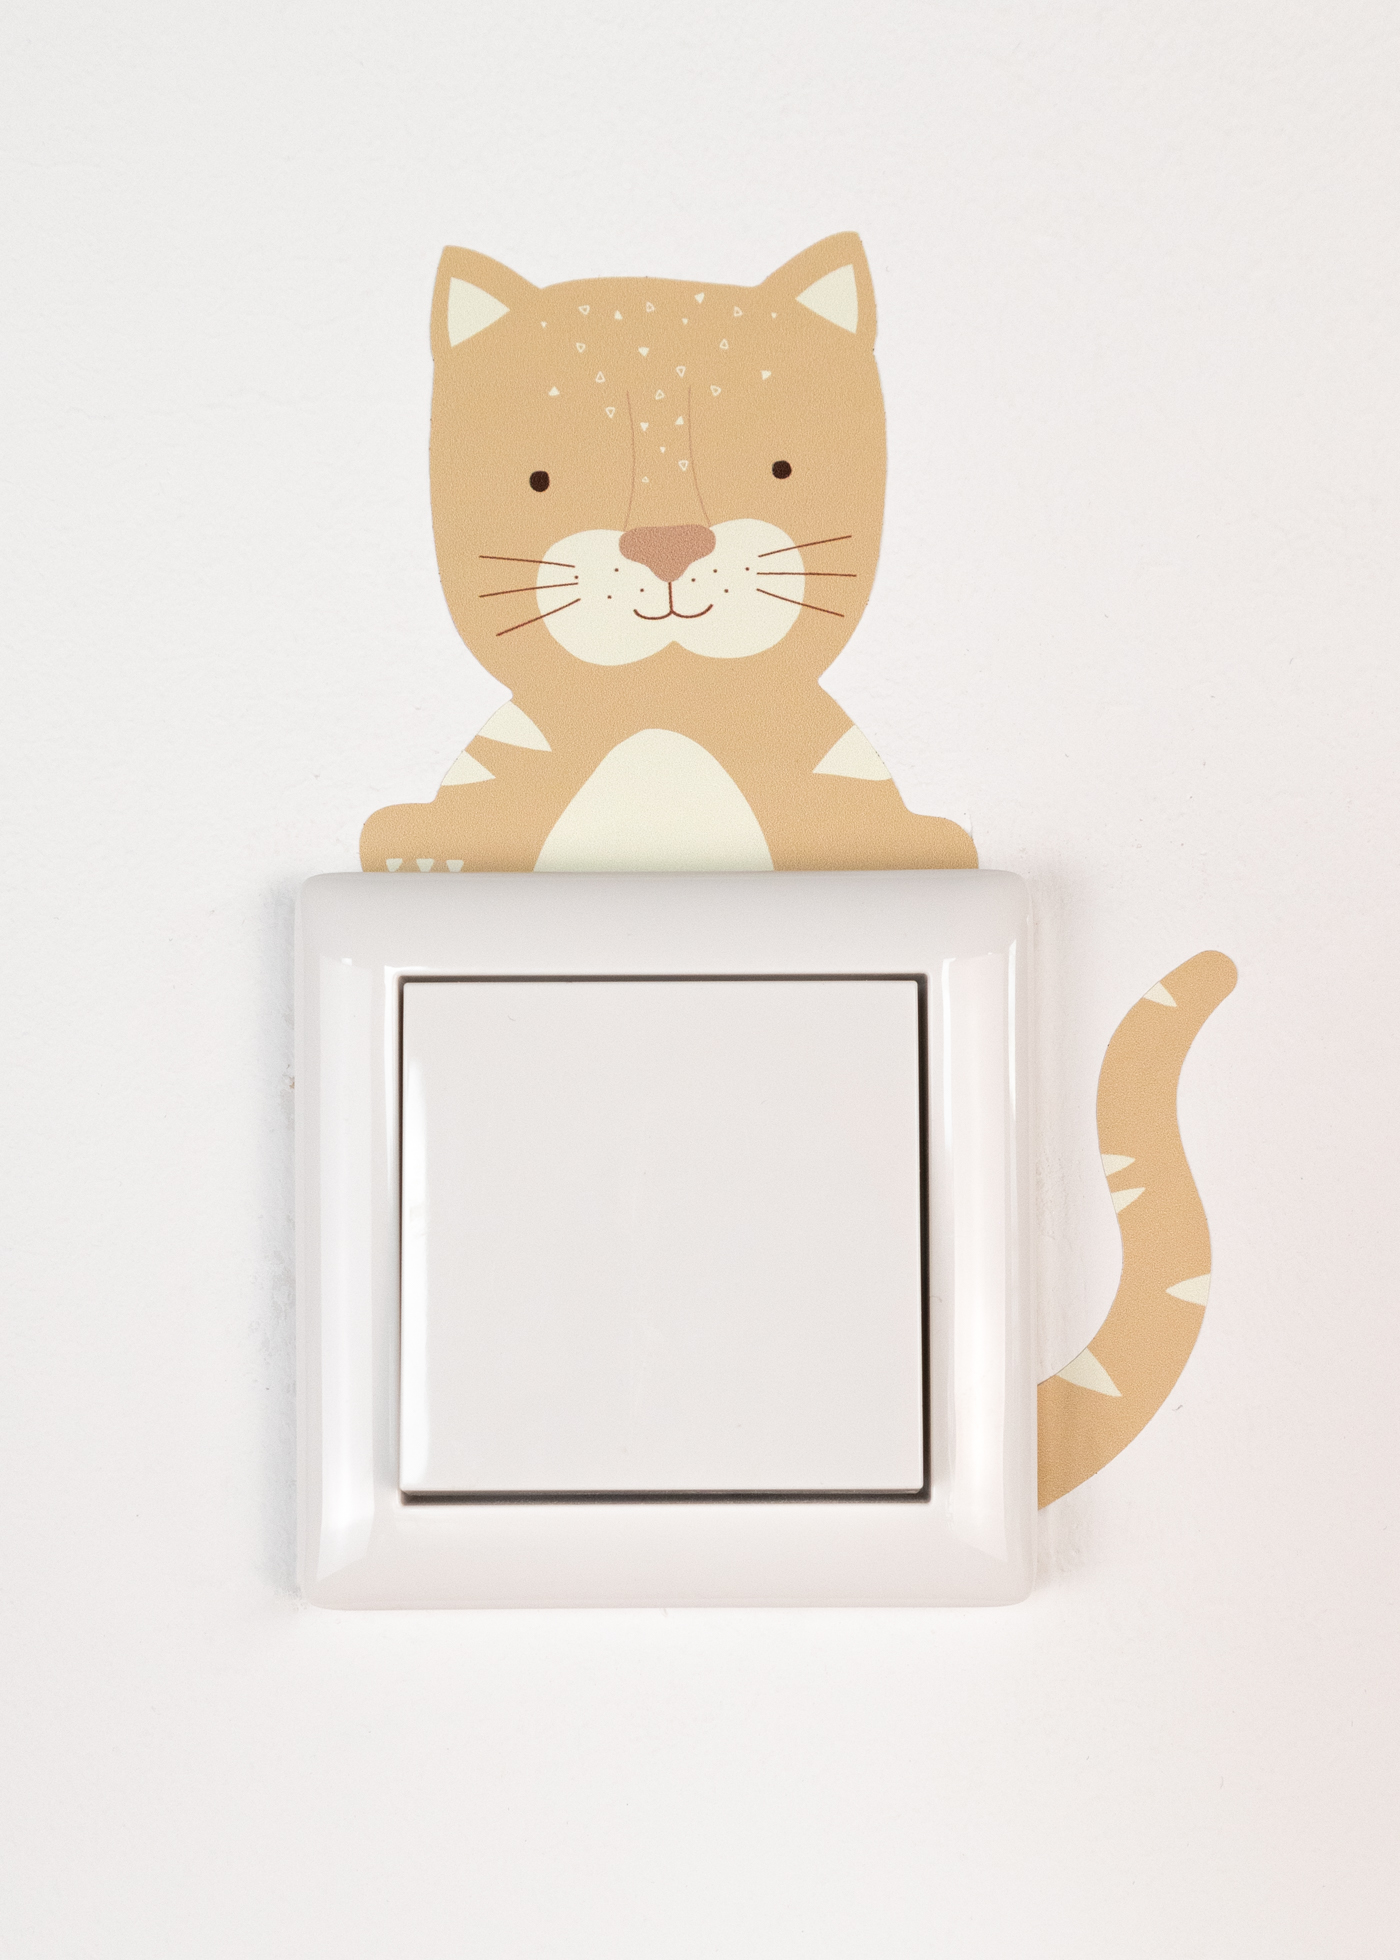 Light switch sticker dog & cat